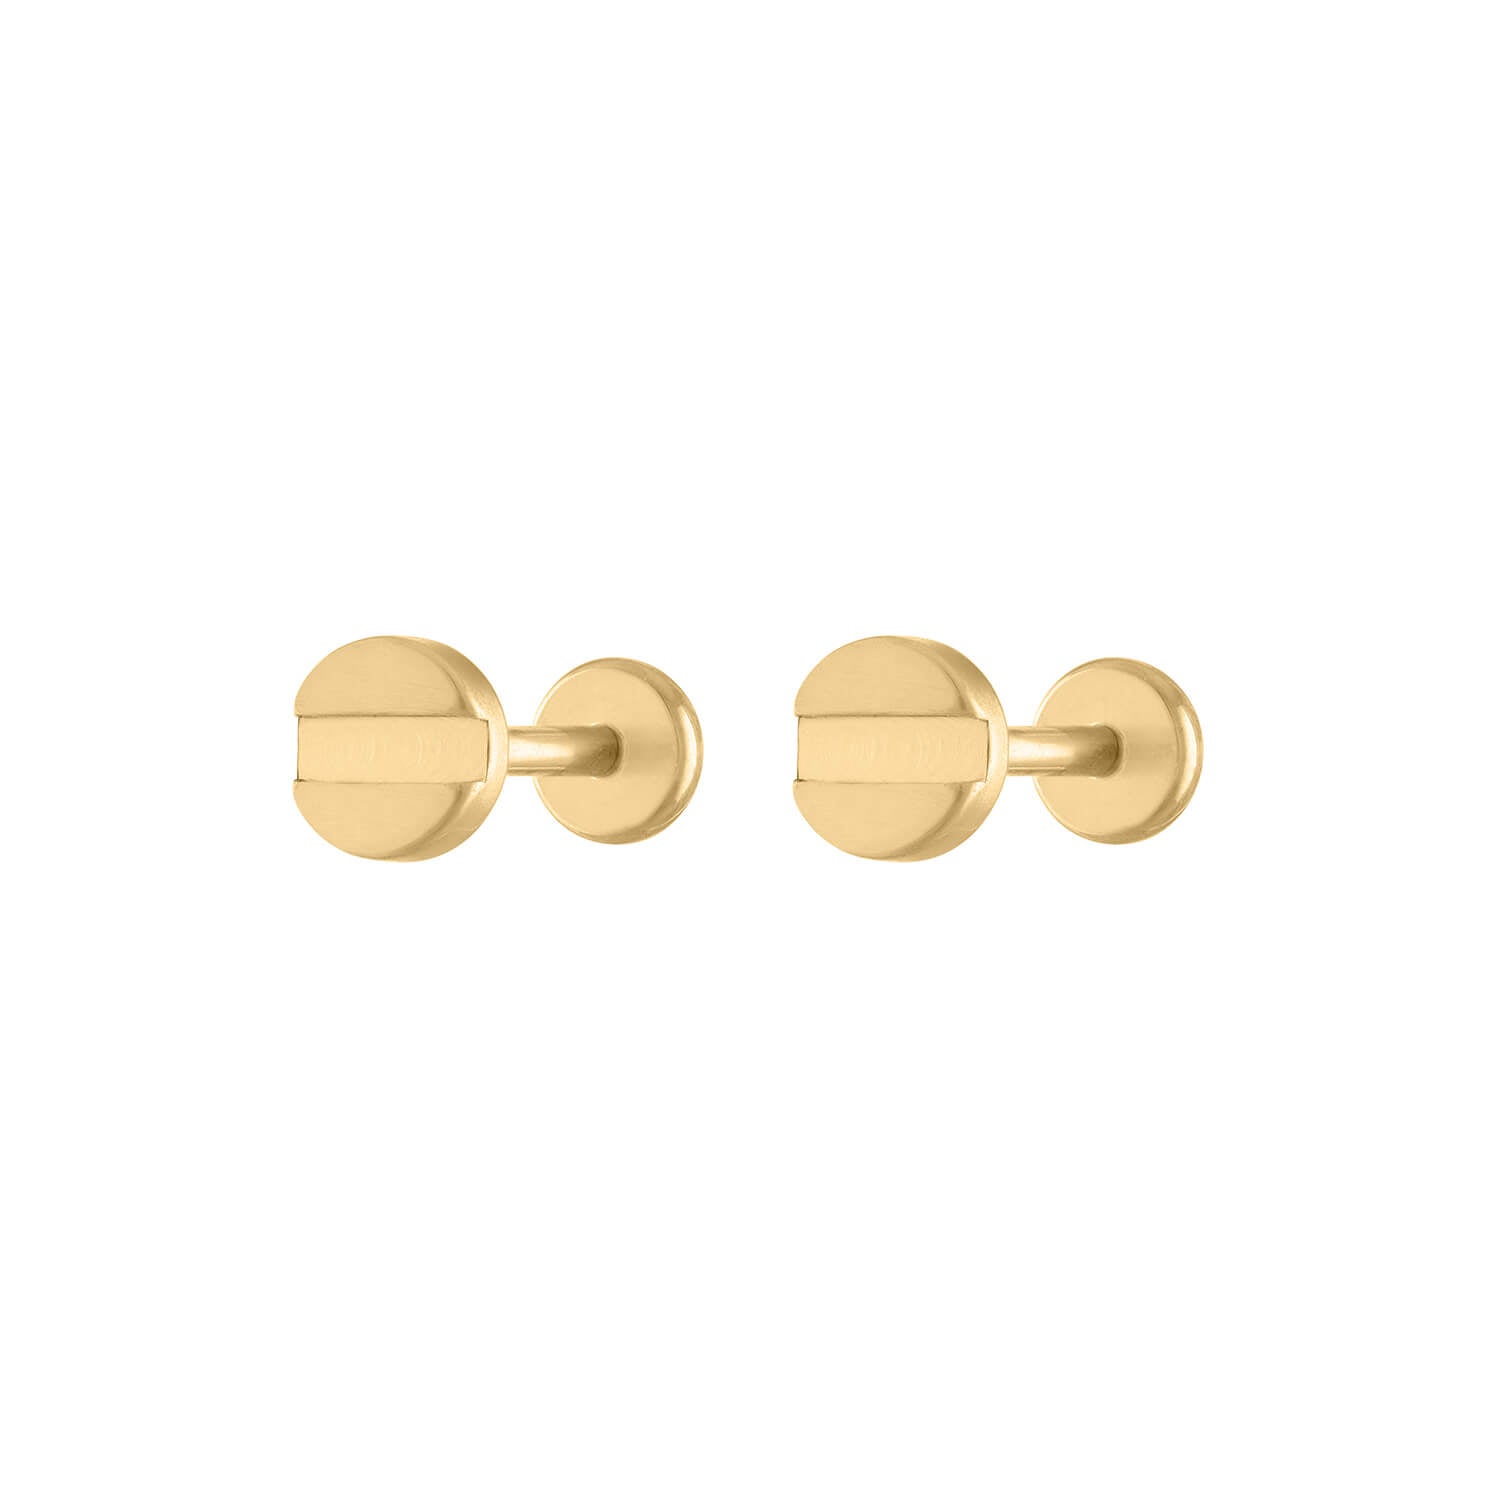 Bolt Nap Earrings in Gold